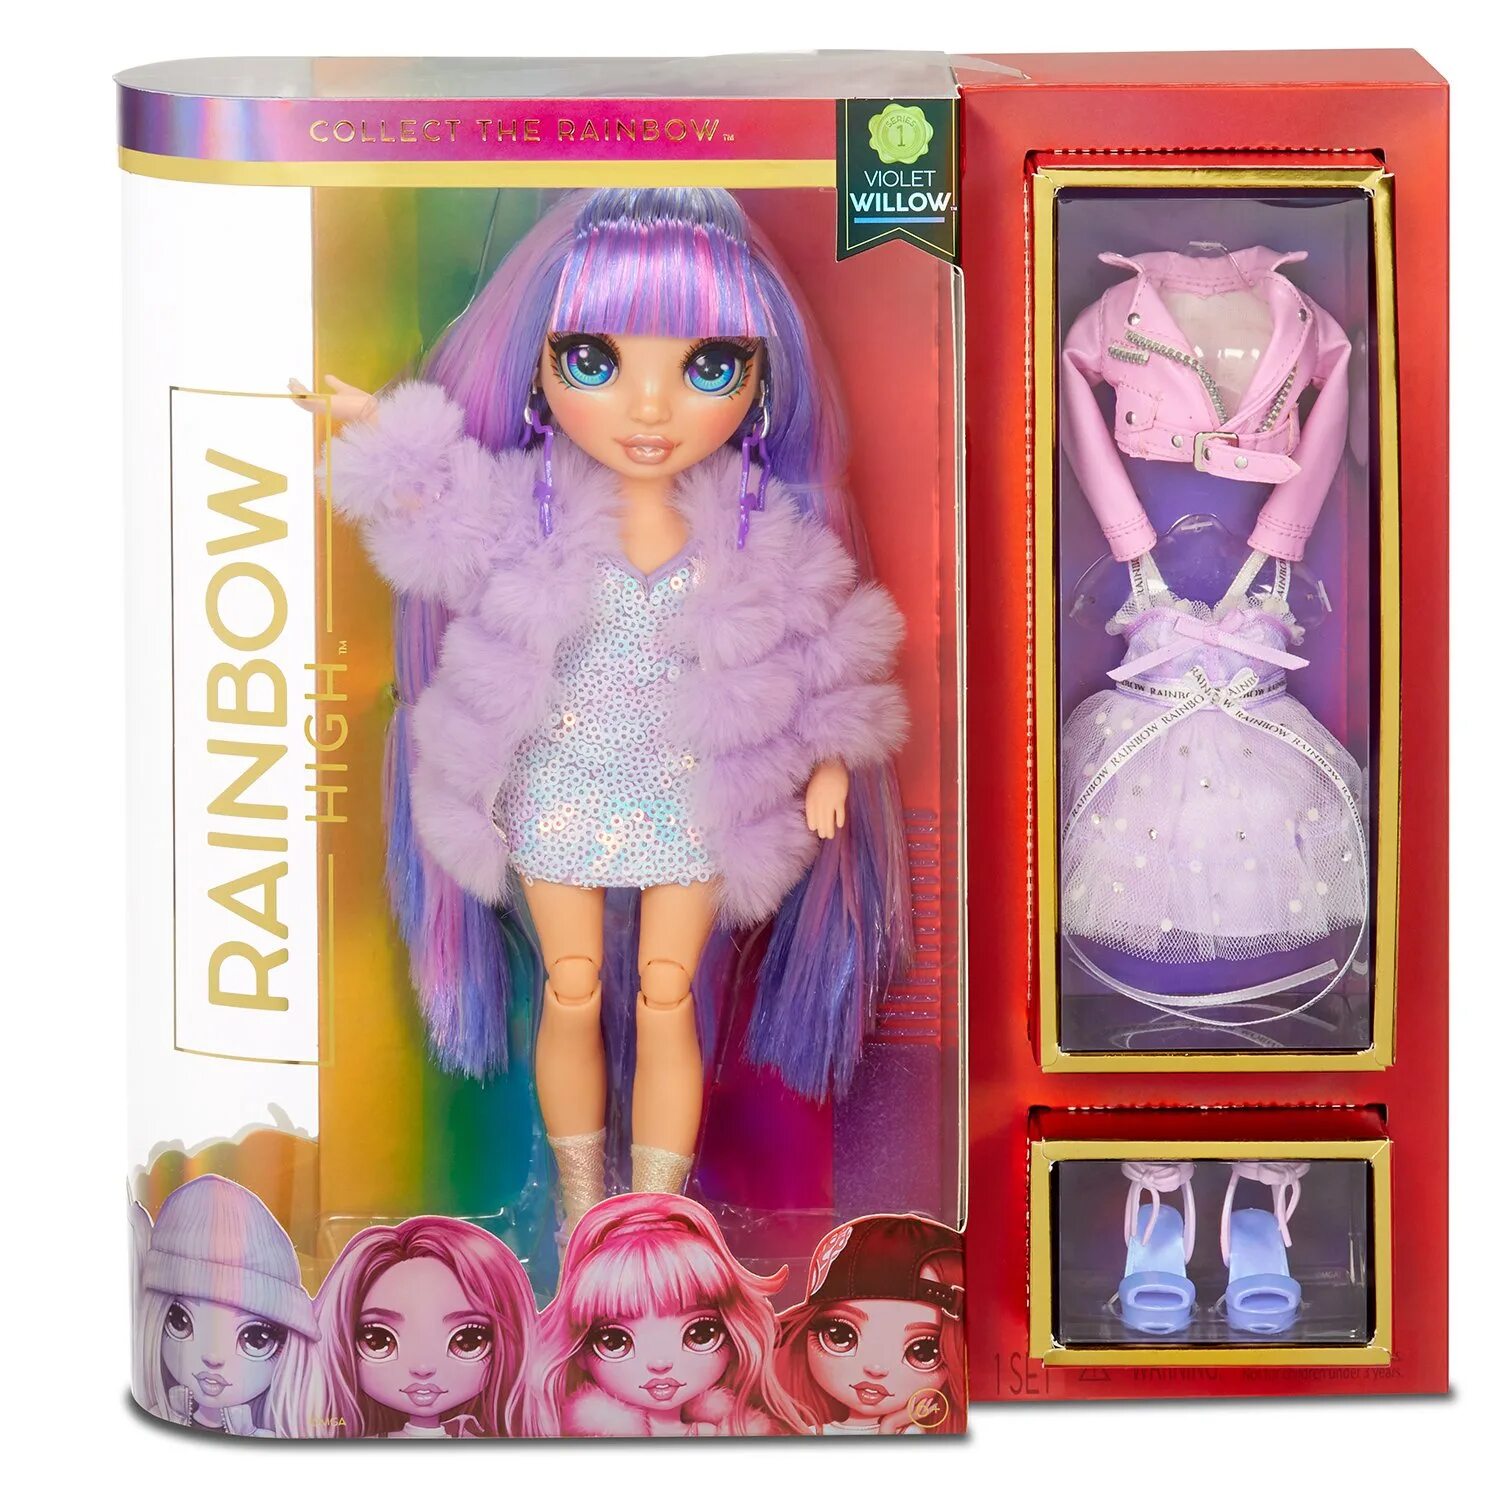 Кукла Rainbow High Violet. Кукла Rainbow High Violet Willow. Rainbow High 569602 кукла Violet Willows.